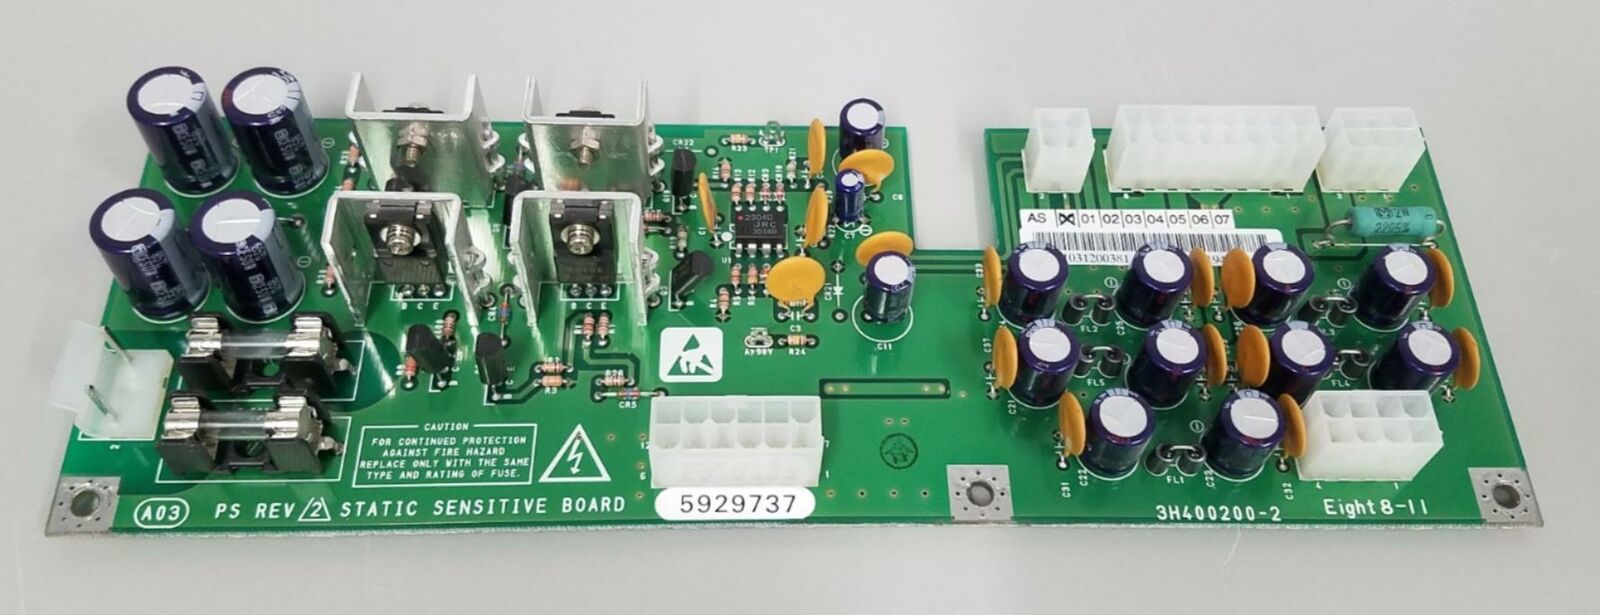 Siemens Ultrasound Sonoline Adara 3H400200-2 Rev 2 Board DIAGNOSTIC ULTRASOUND MACHINES FOR SALE